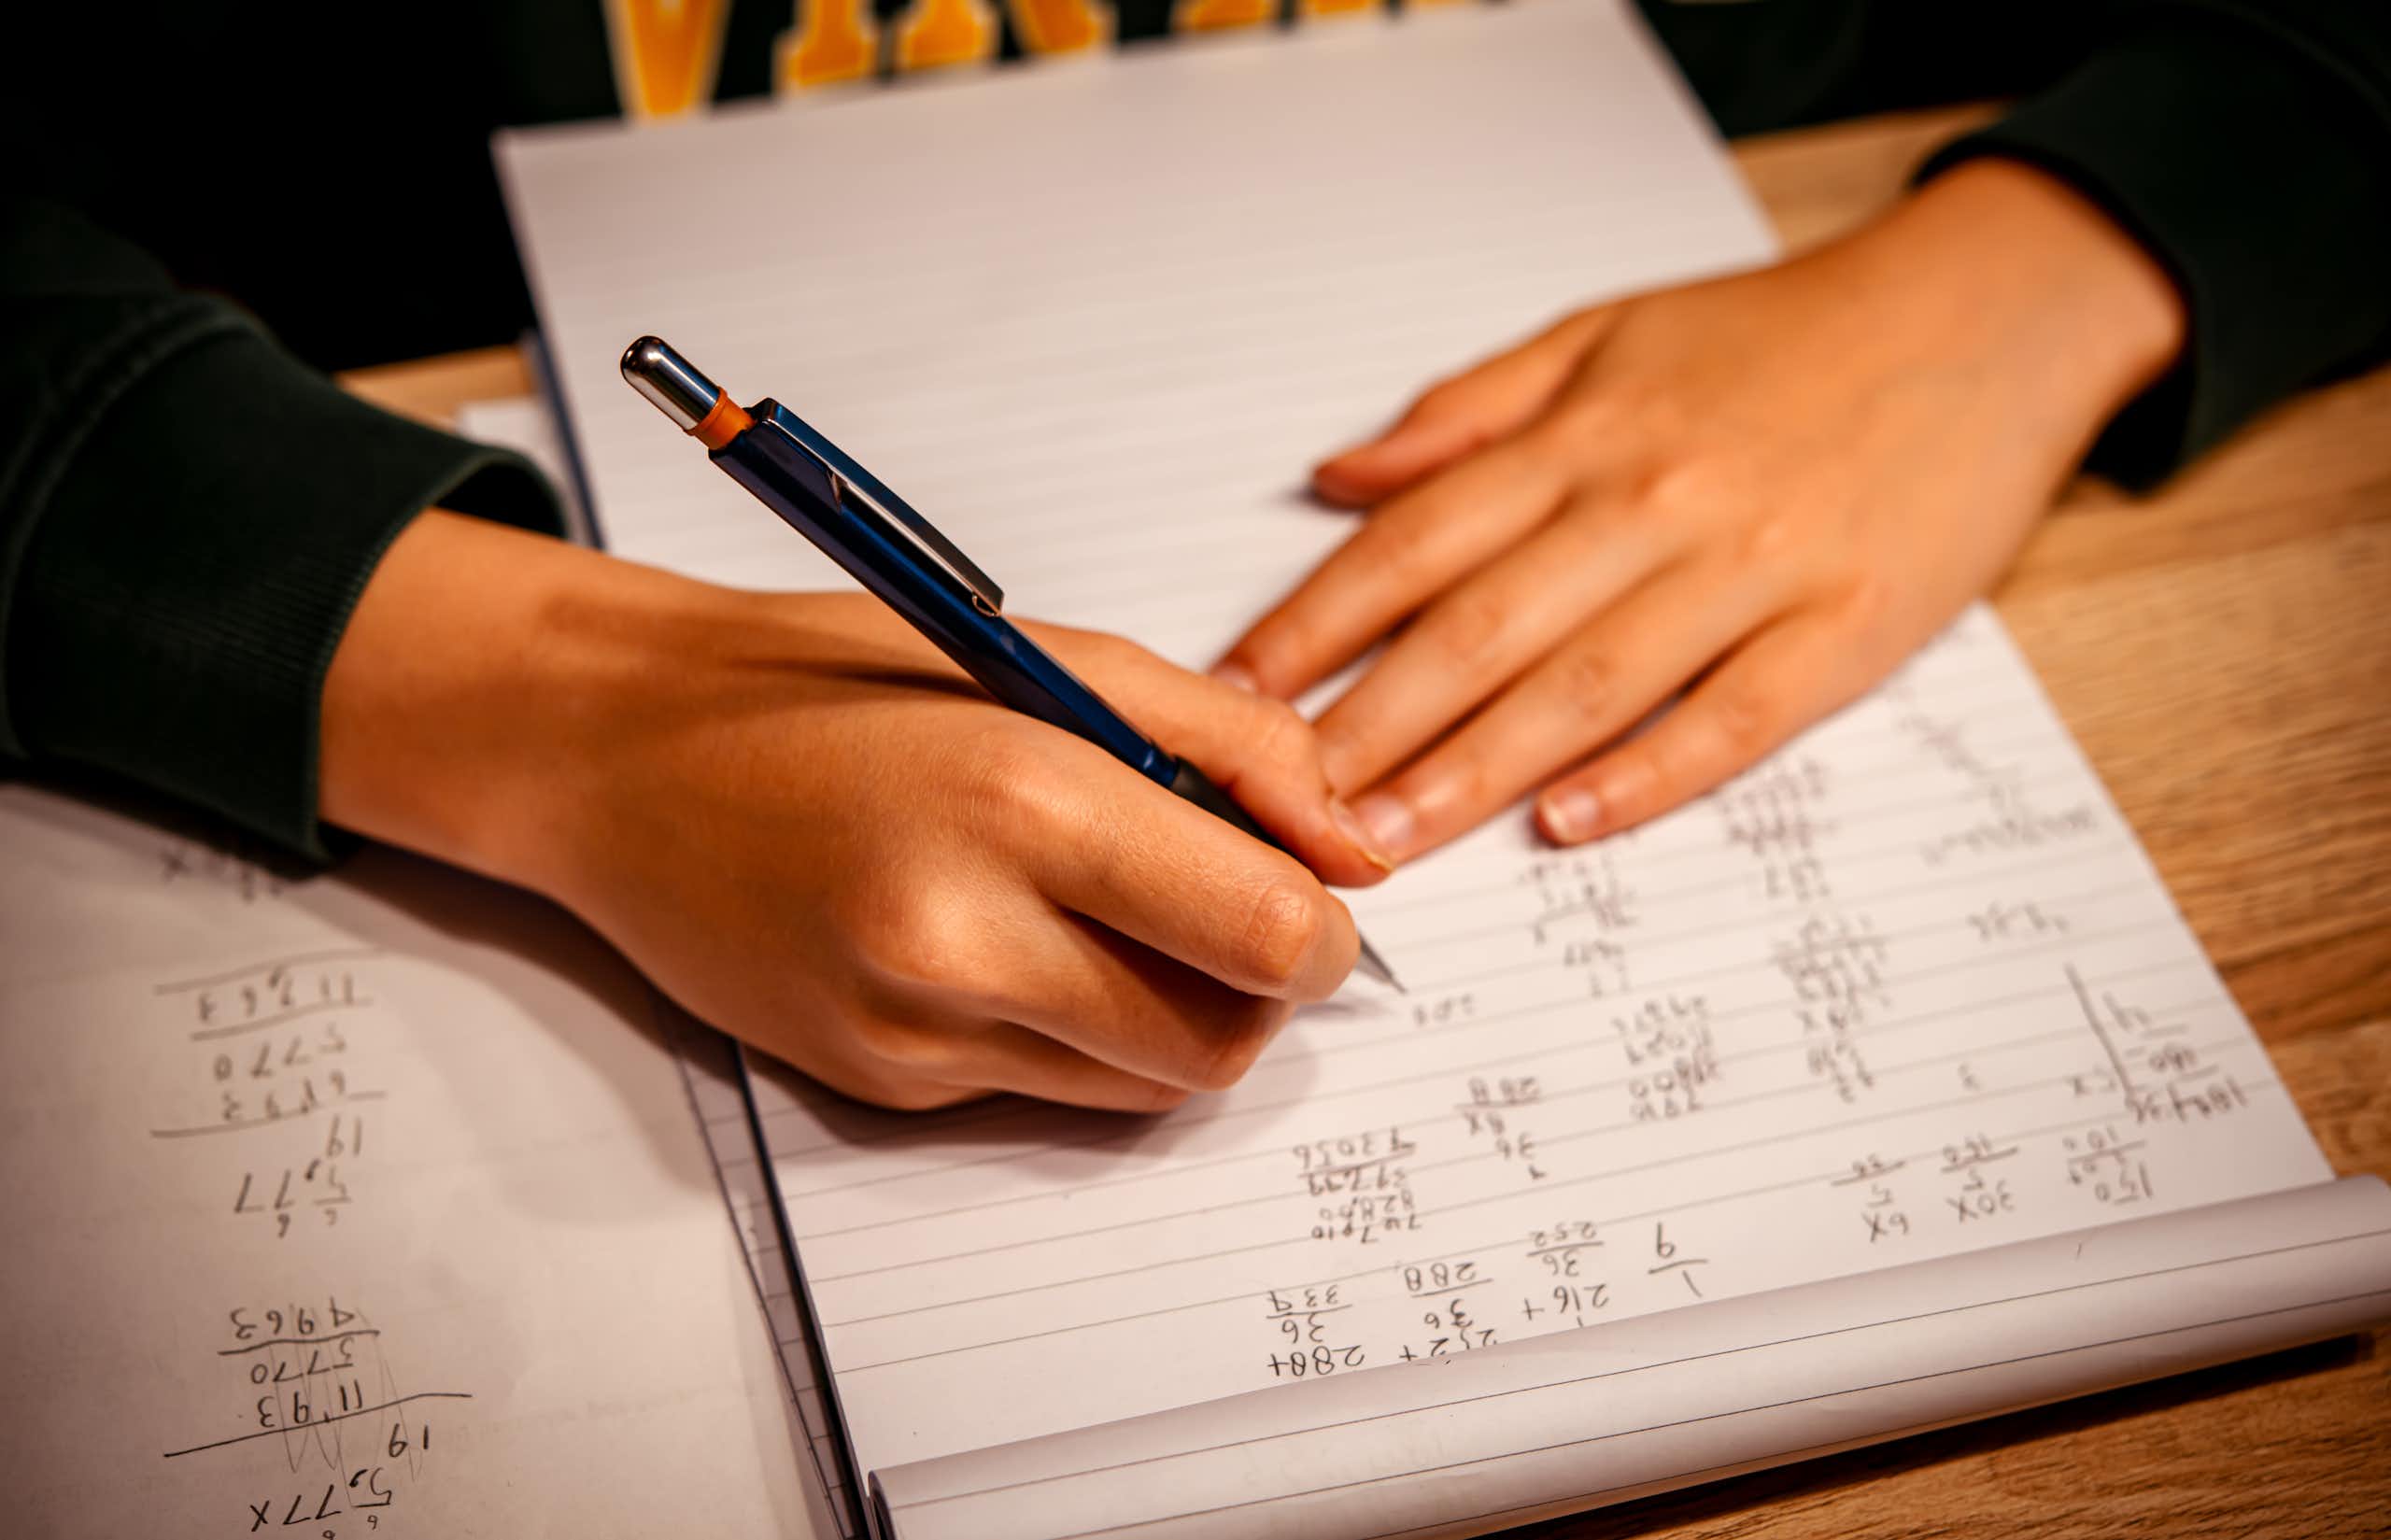 Child's hands shown writing maths homework